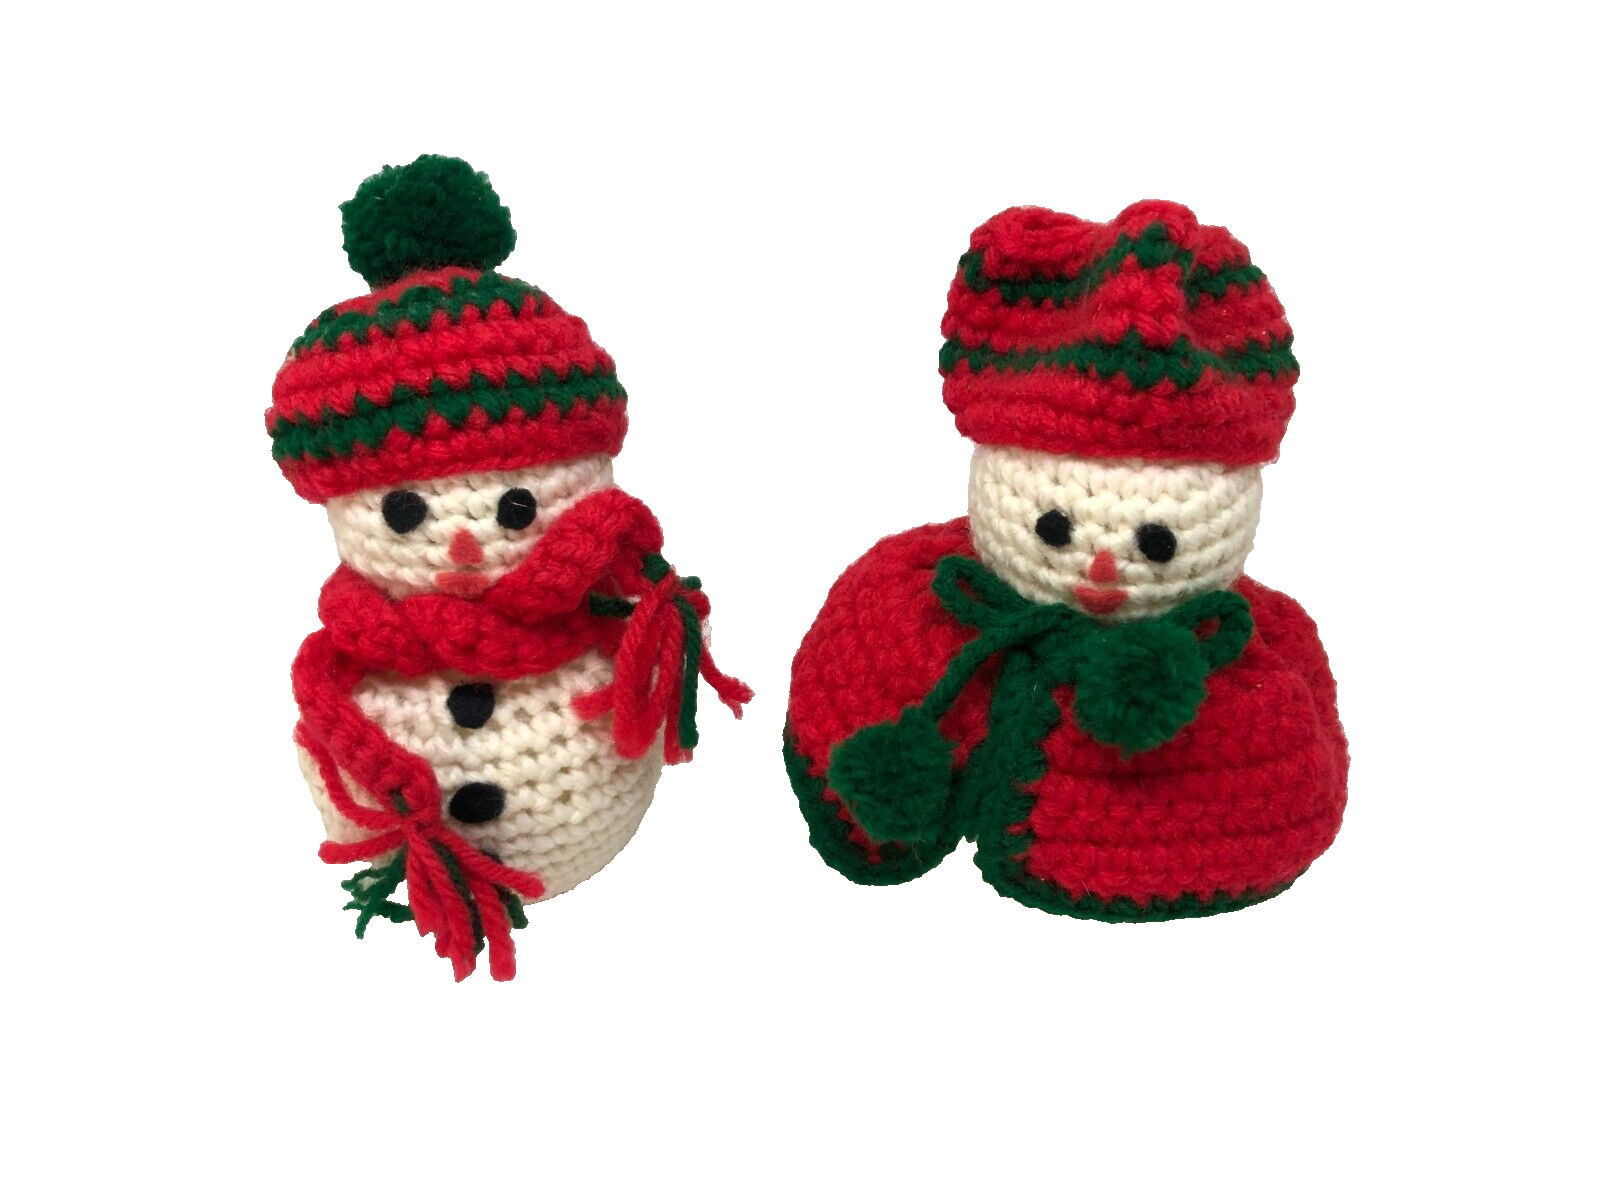 Vintage Handmade Crocheted Knitted Christmas Snowmen Mr. and Mrs.